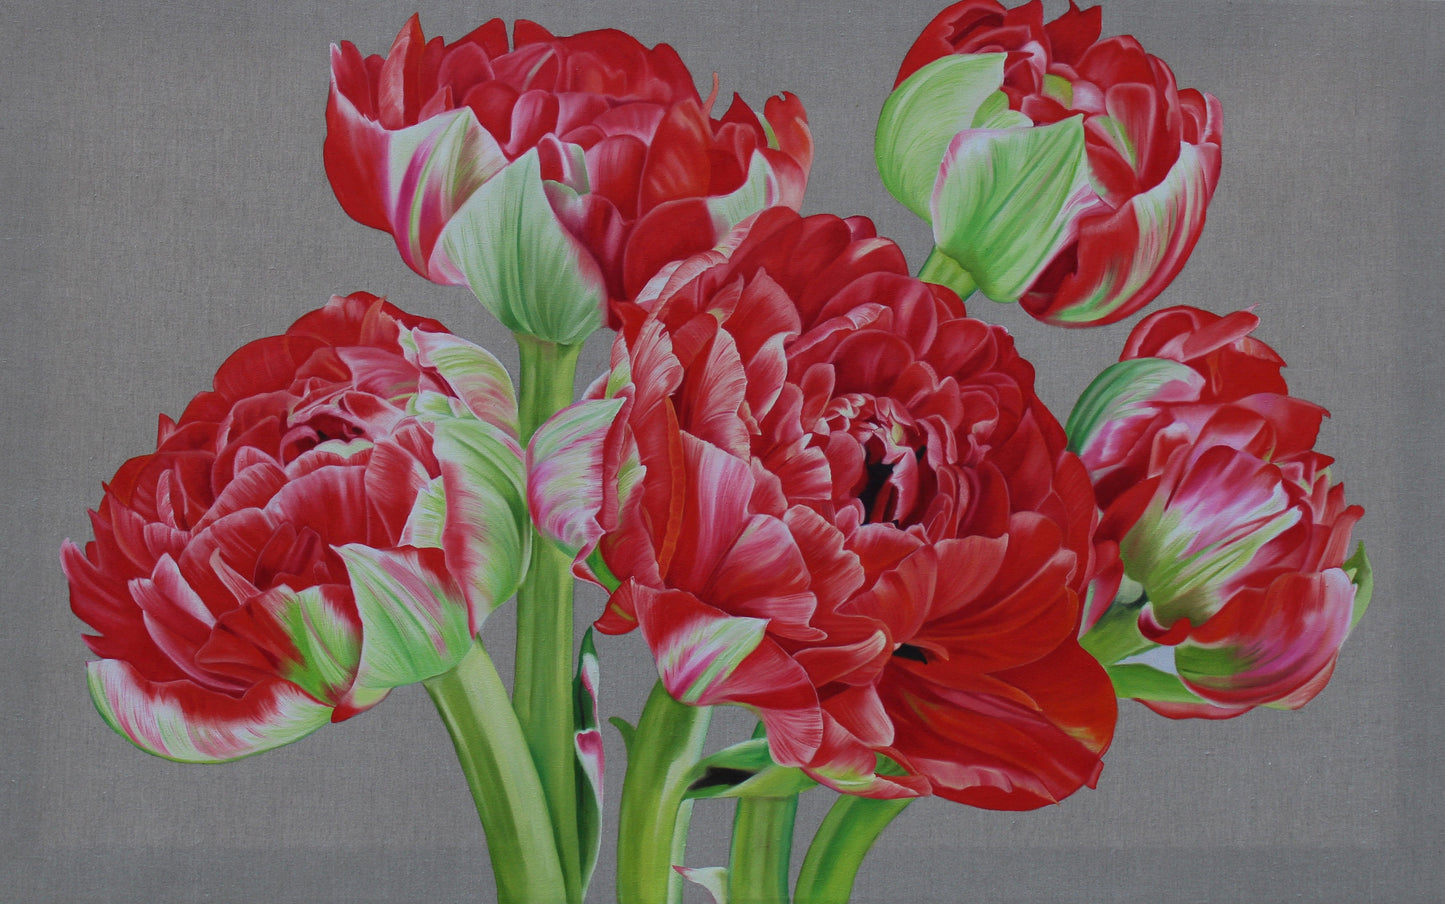 Floral Artwork Tulip farm - Flower Tulip Painting - Red Tulips 1 - Original Oil Painting